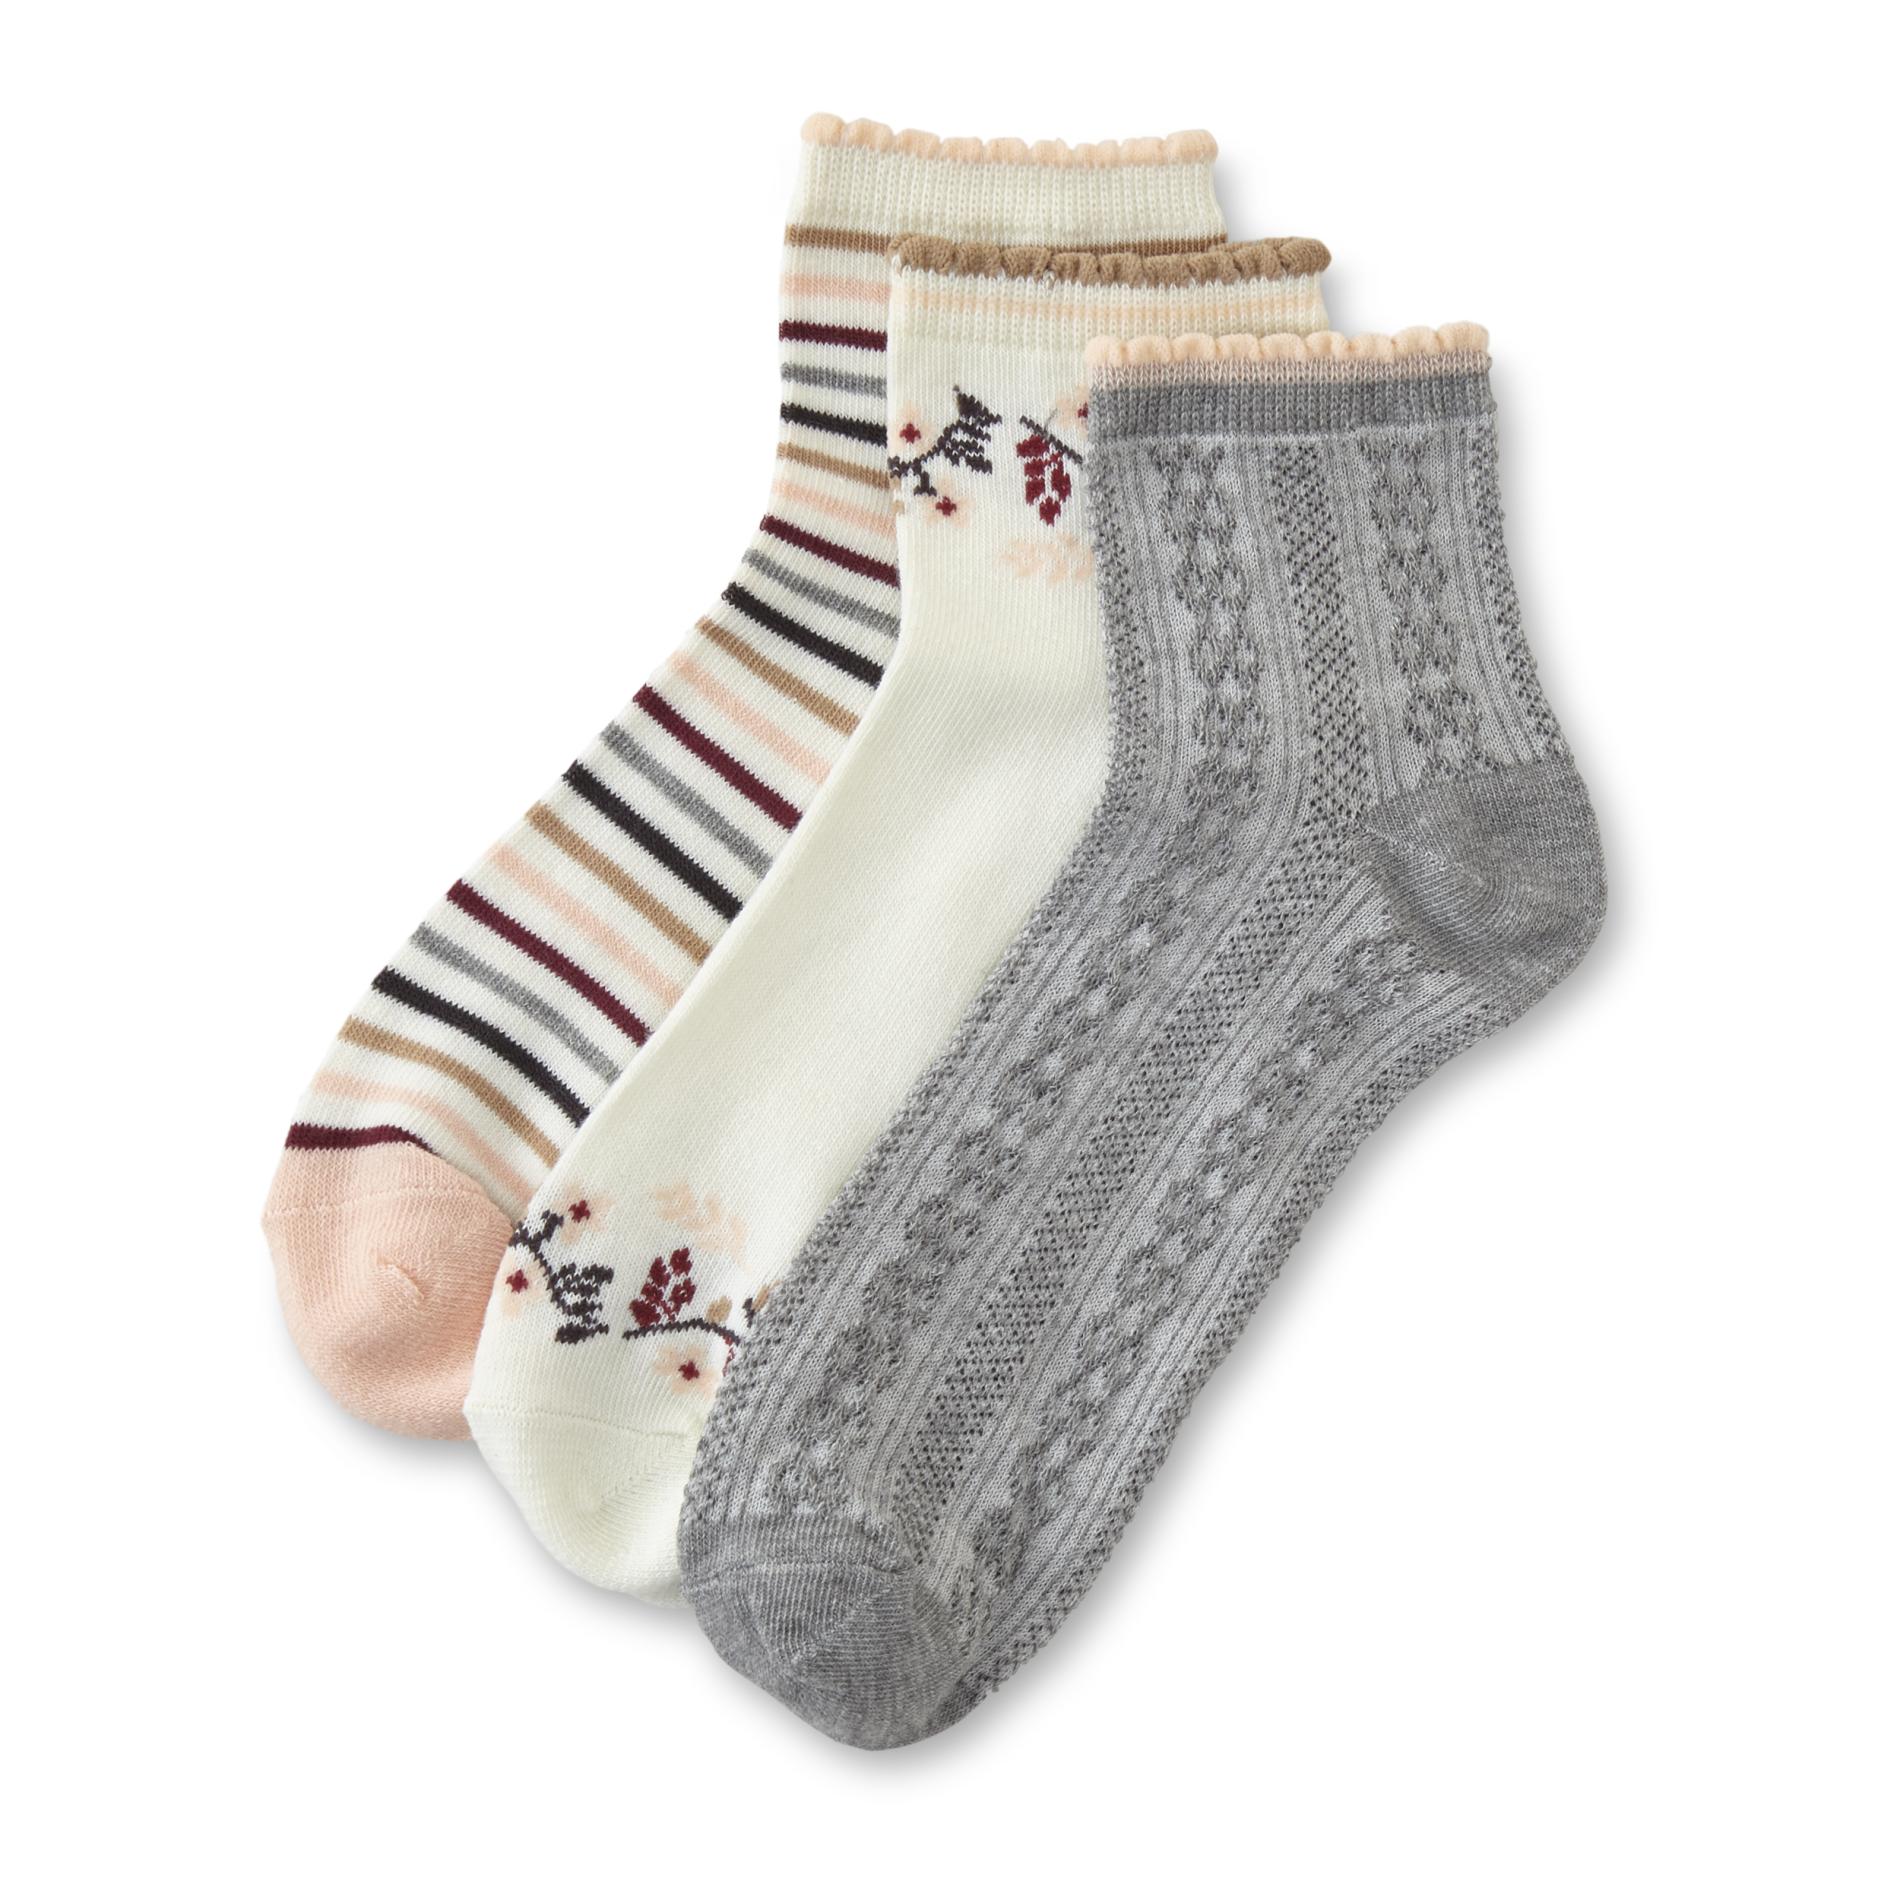 Women's 3-Pairs Quarter Socks - Floral & Striped